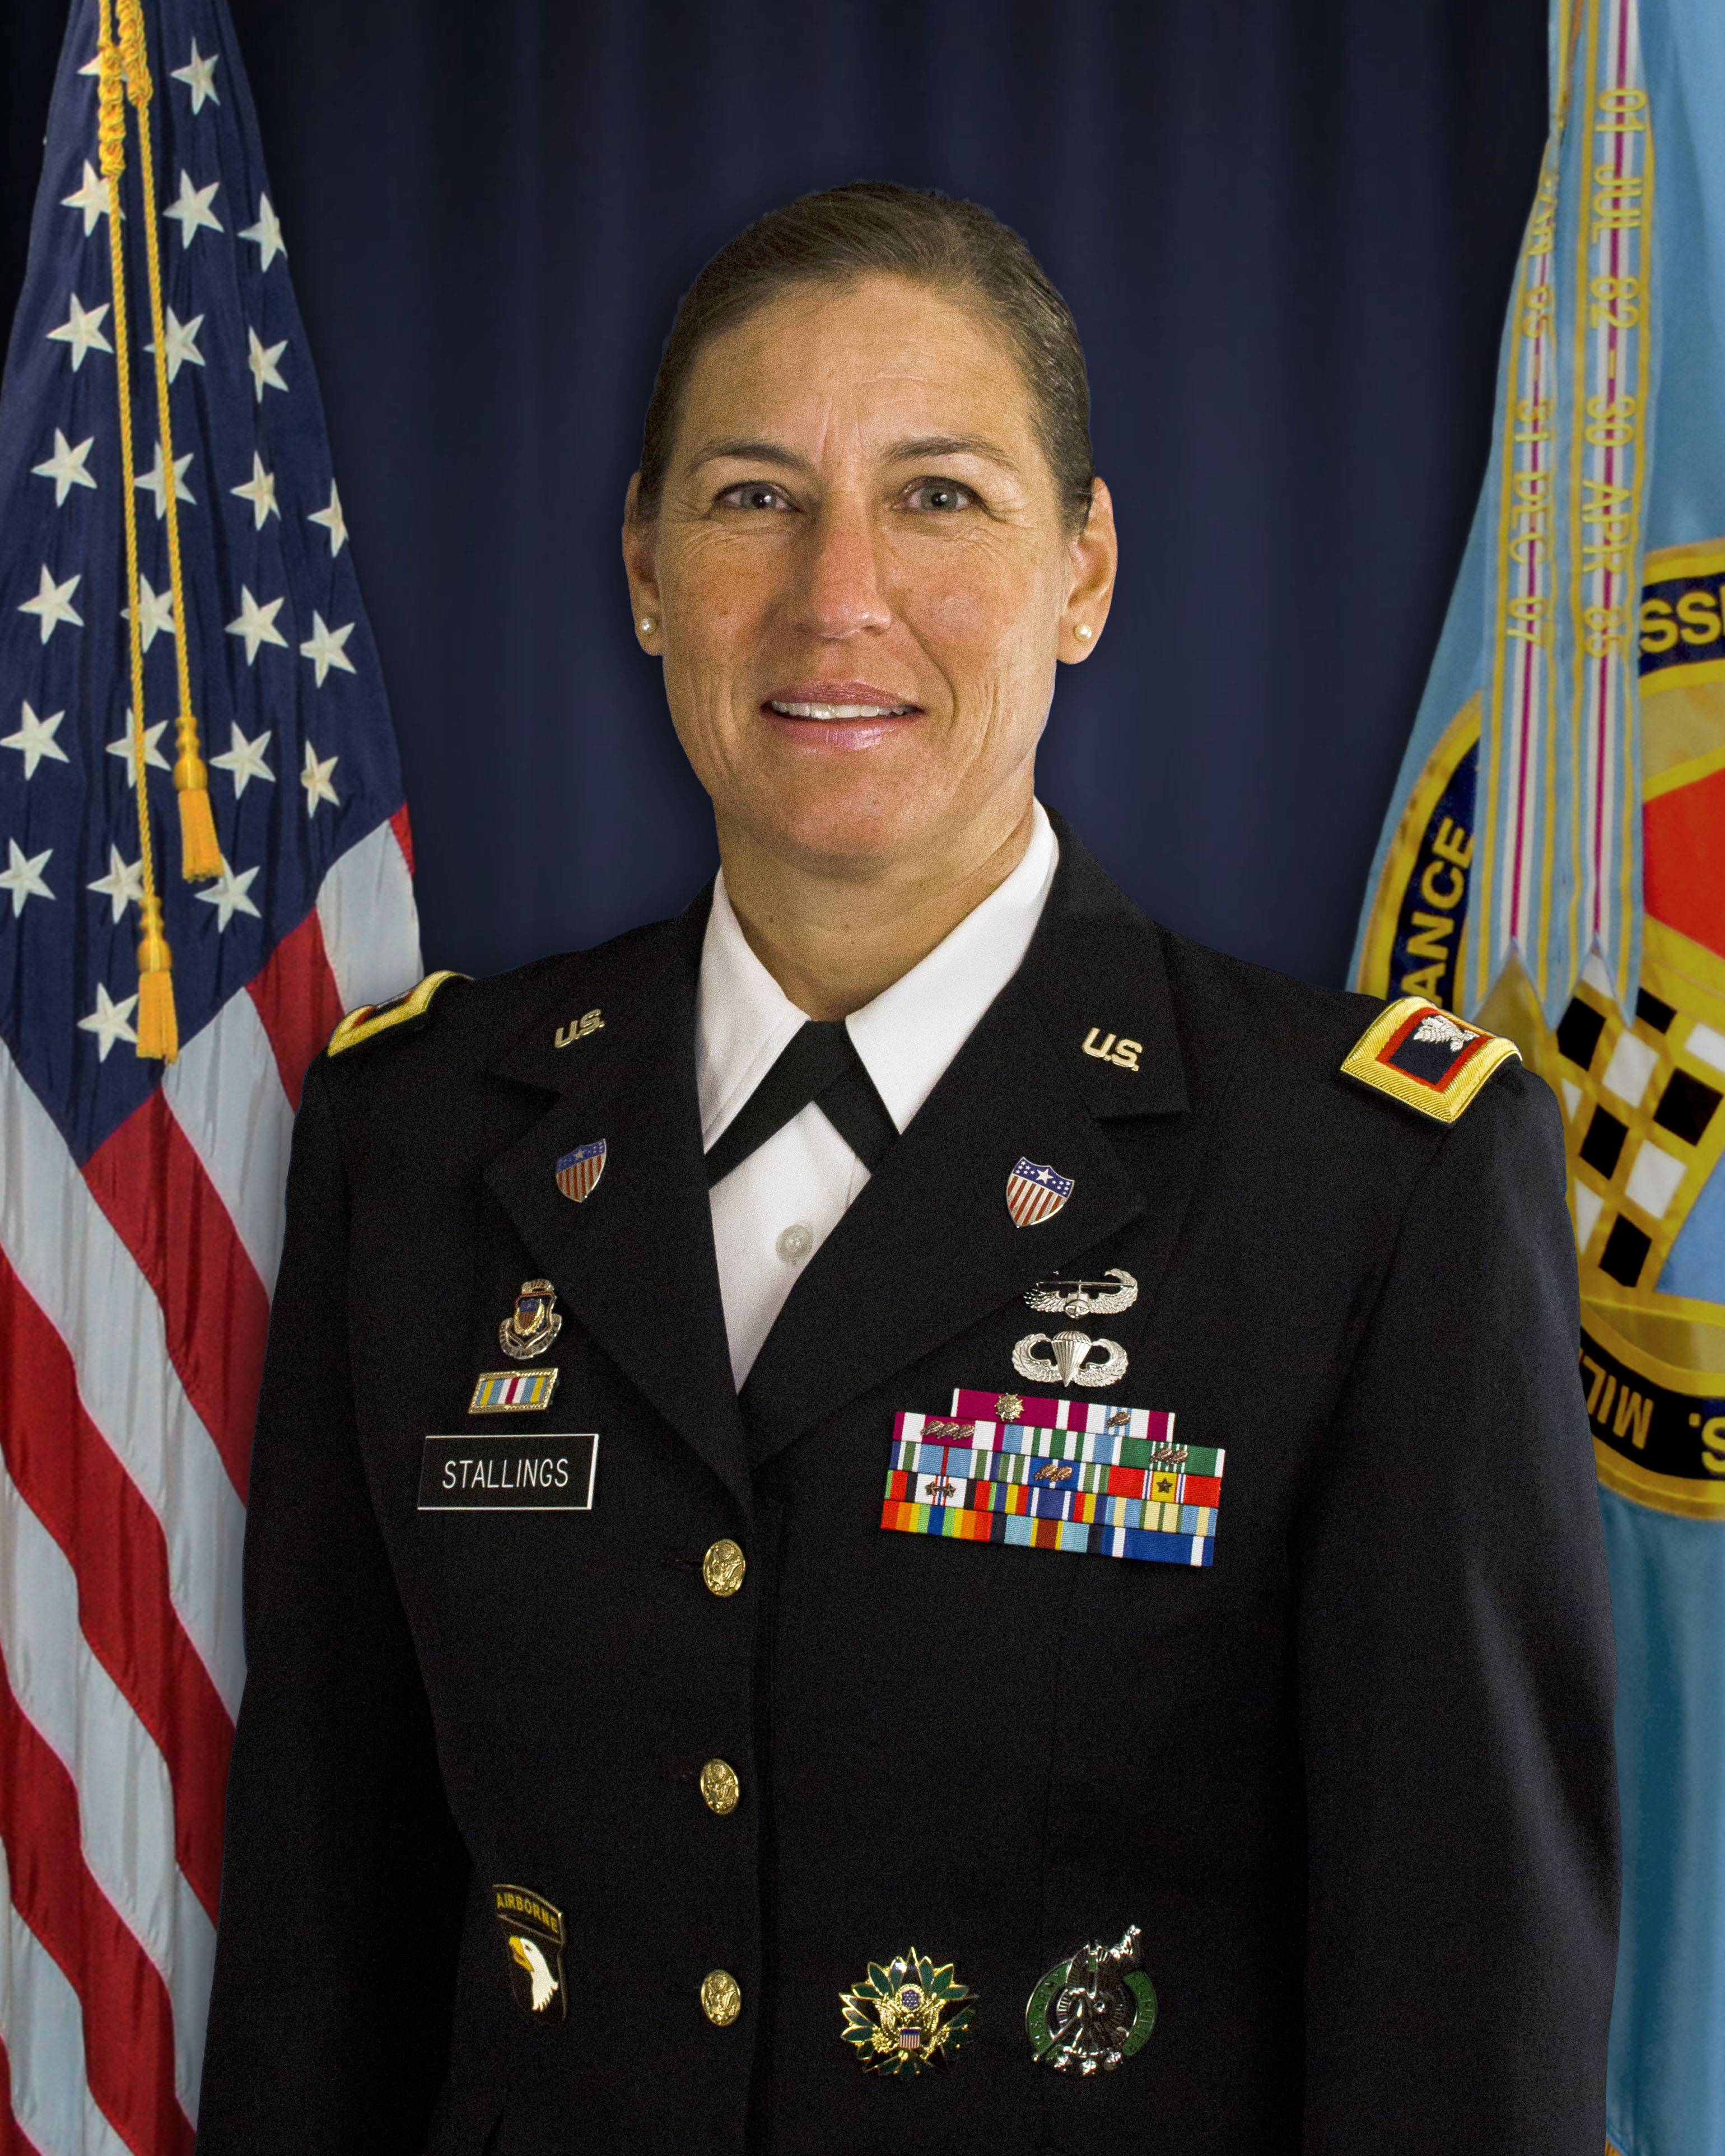 Colonel Megan Stallings, U.S. Army